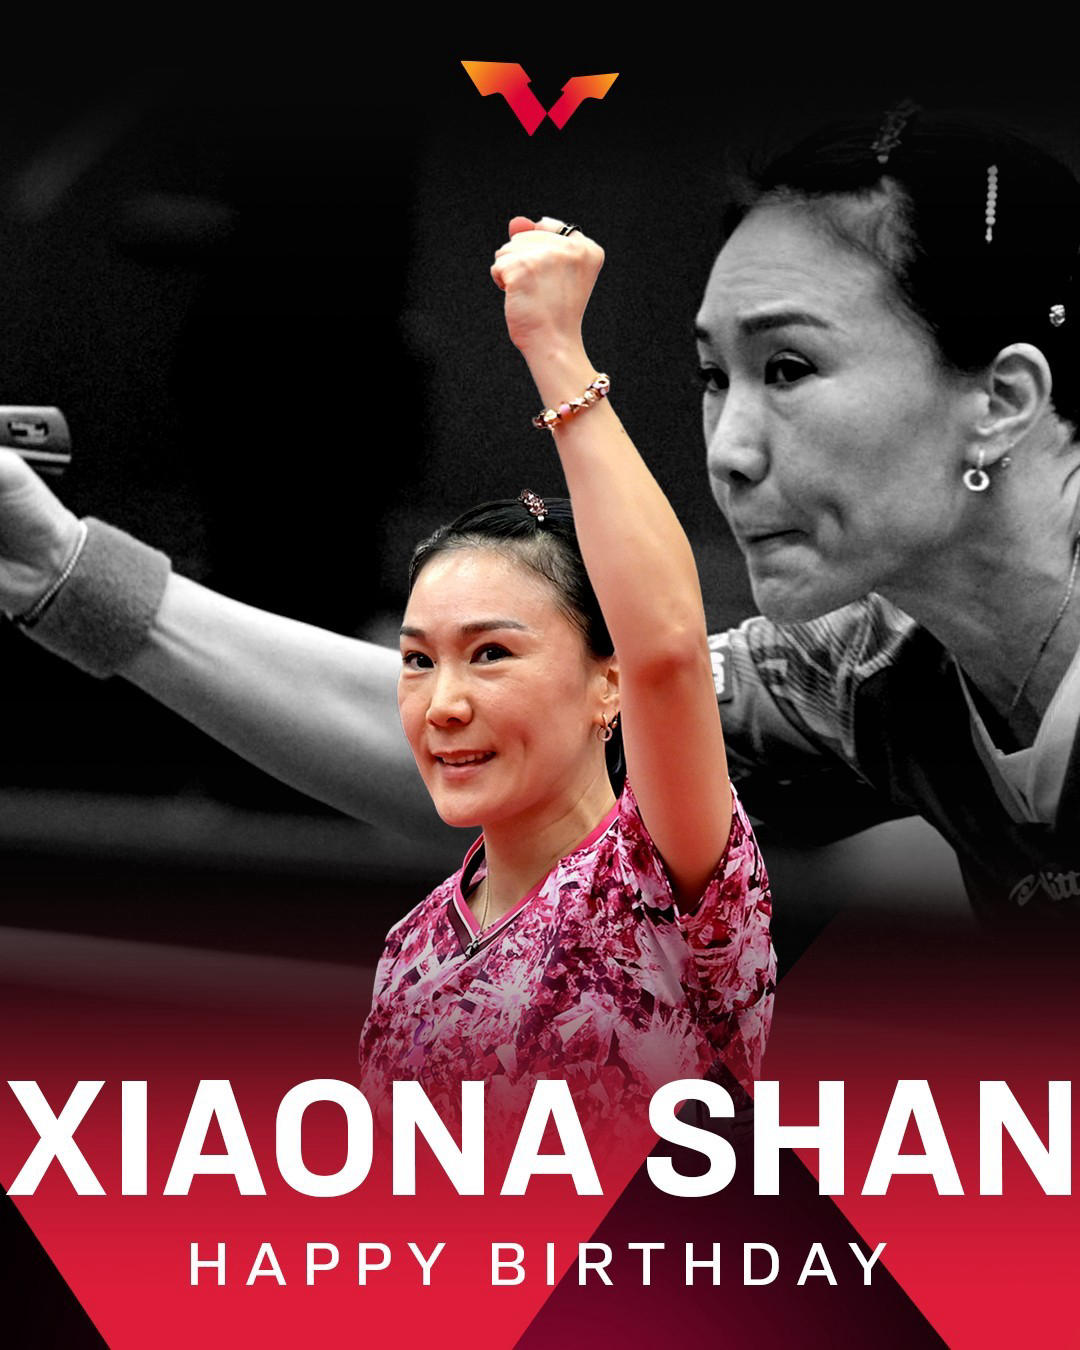 World Table Tennis - Happy birthday to #xiaonashan